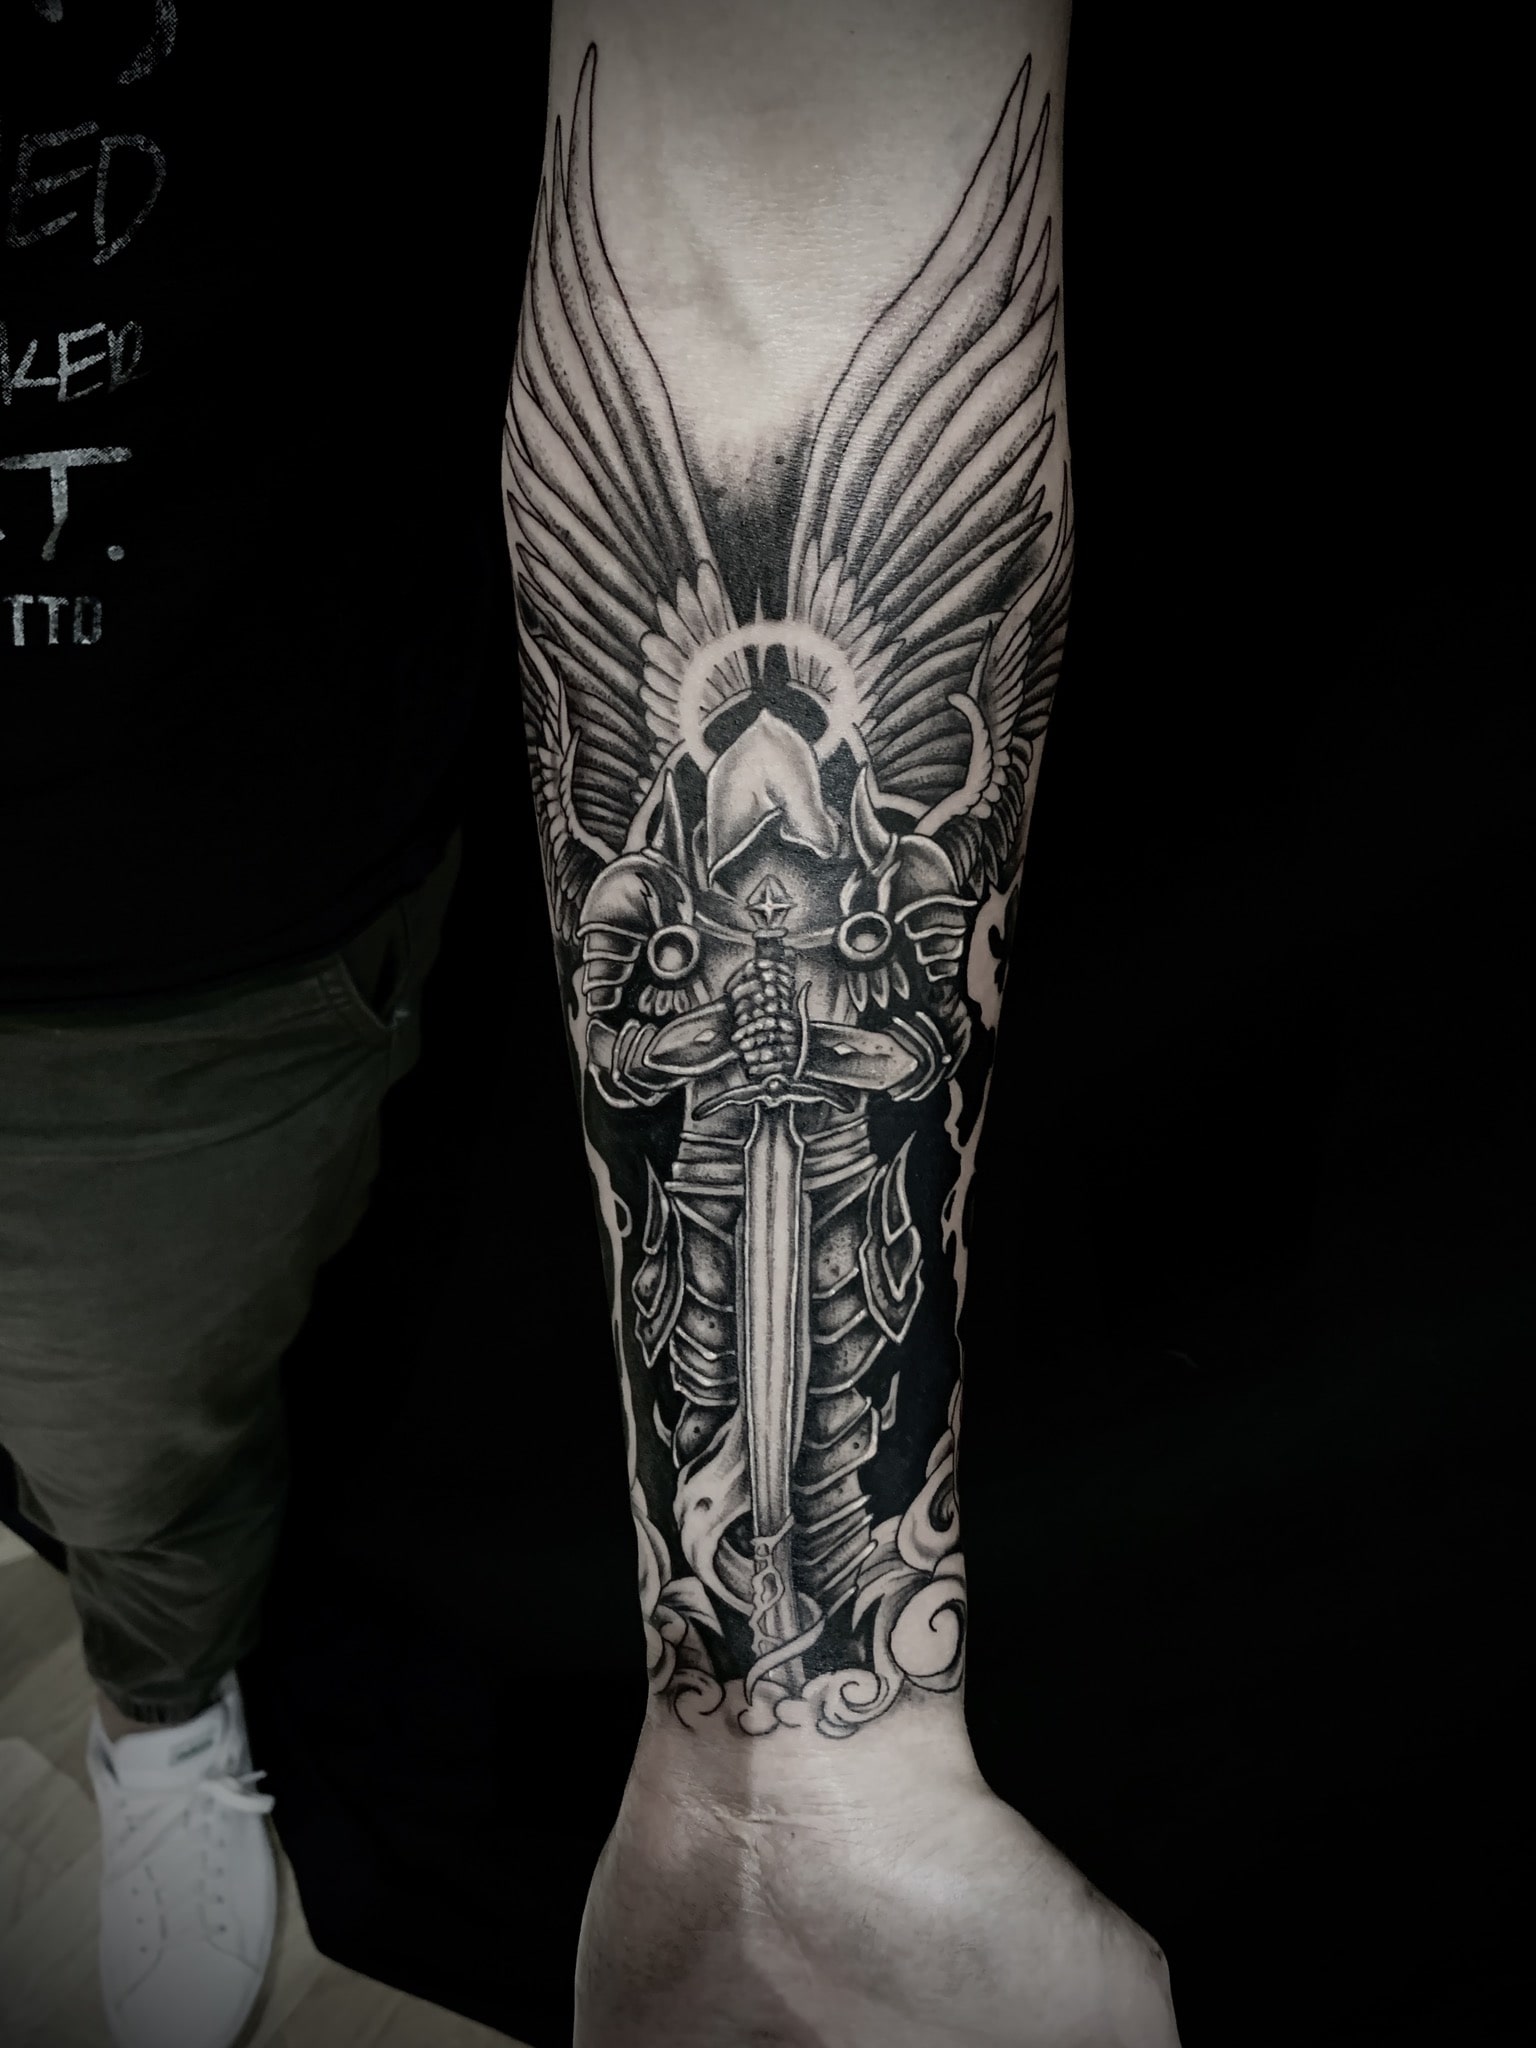 Tattoo Anansi München Artist David blackwork knight Ritter hero Held sword Schert